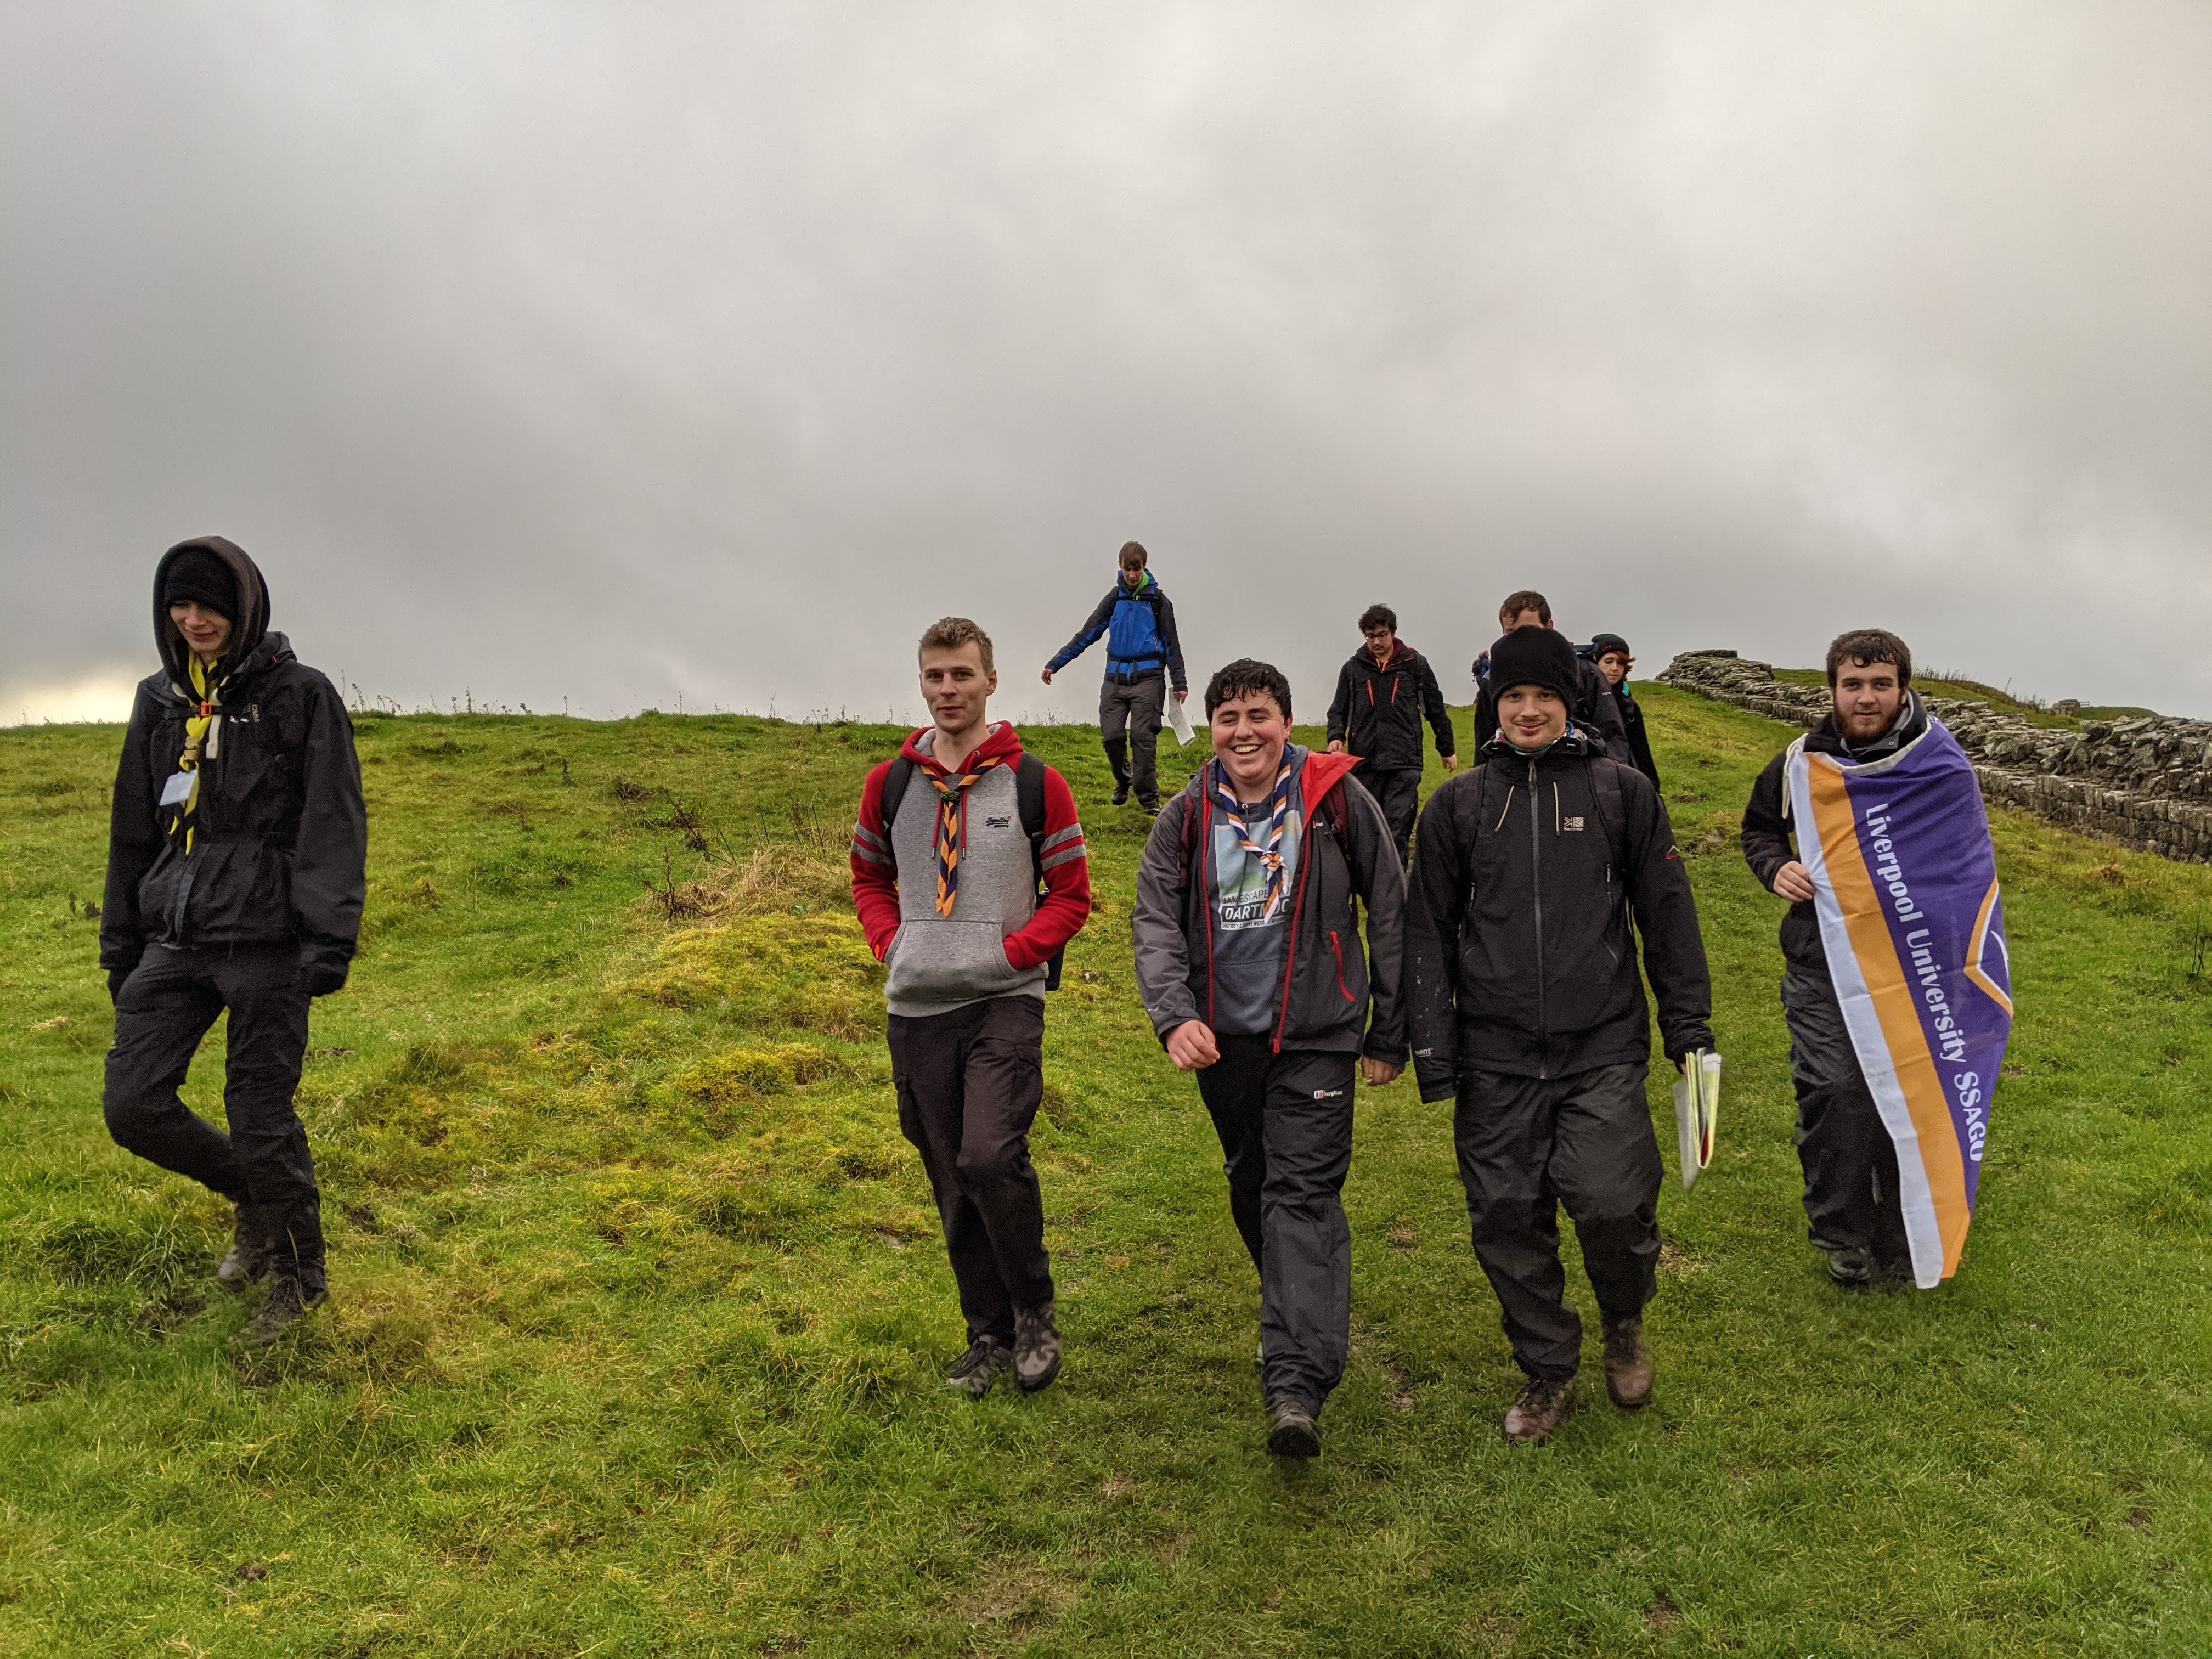 Group photo of those on the Hard Hike activity, walking alongside Hadrian's Wall